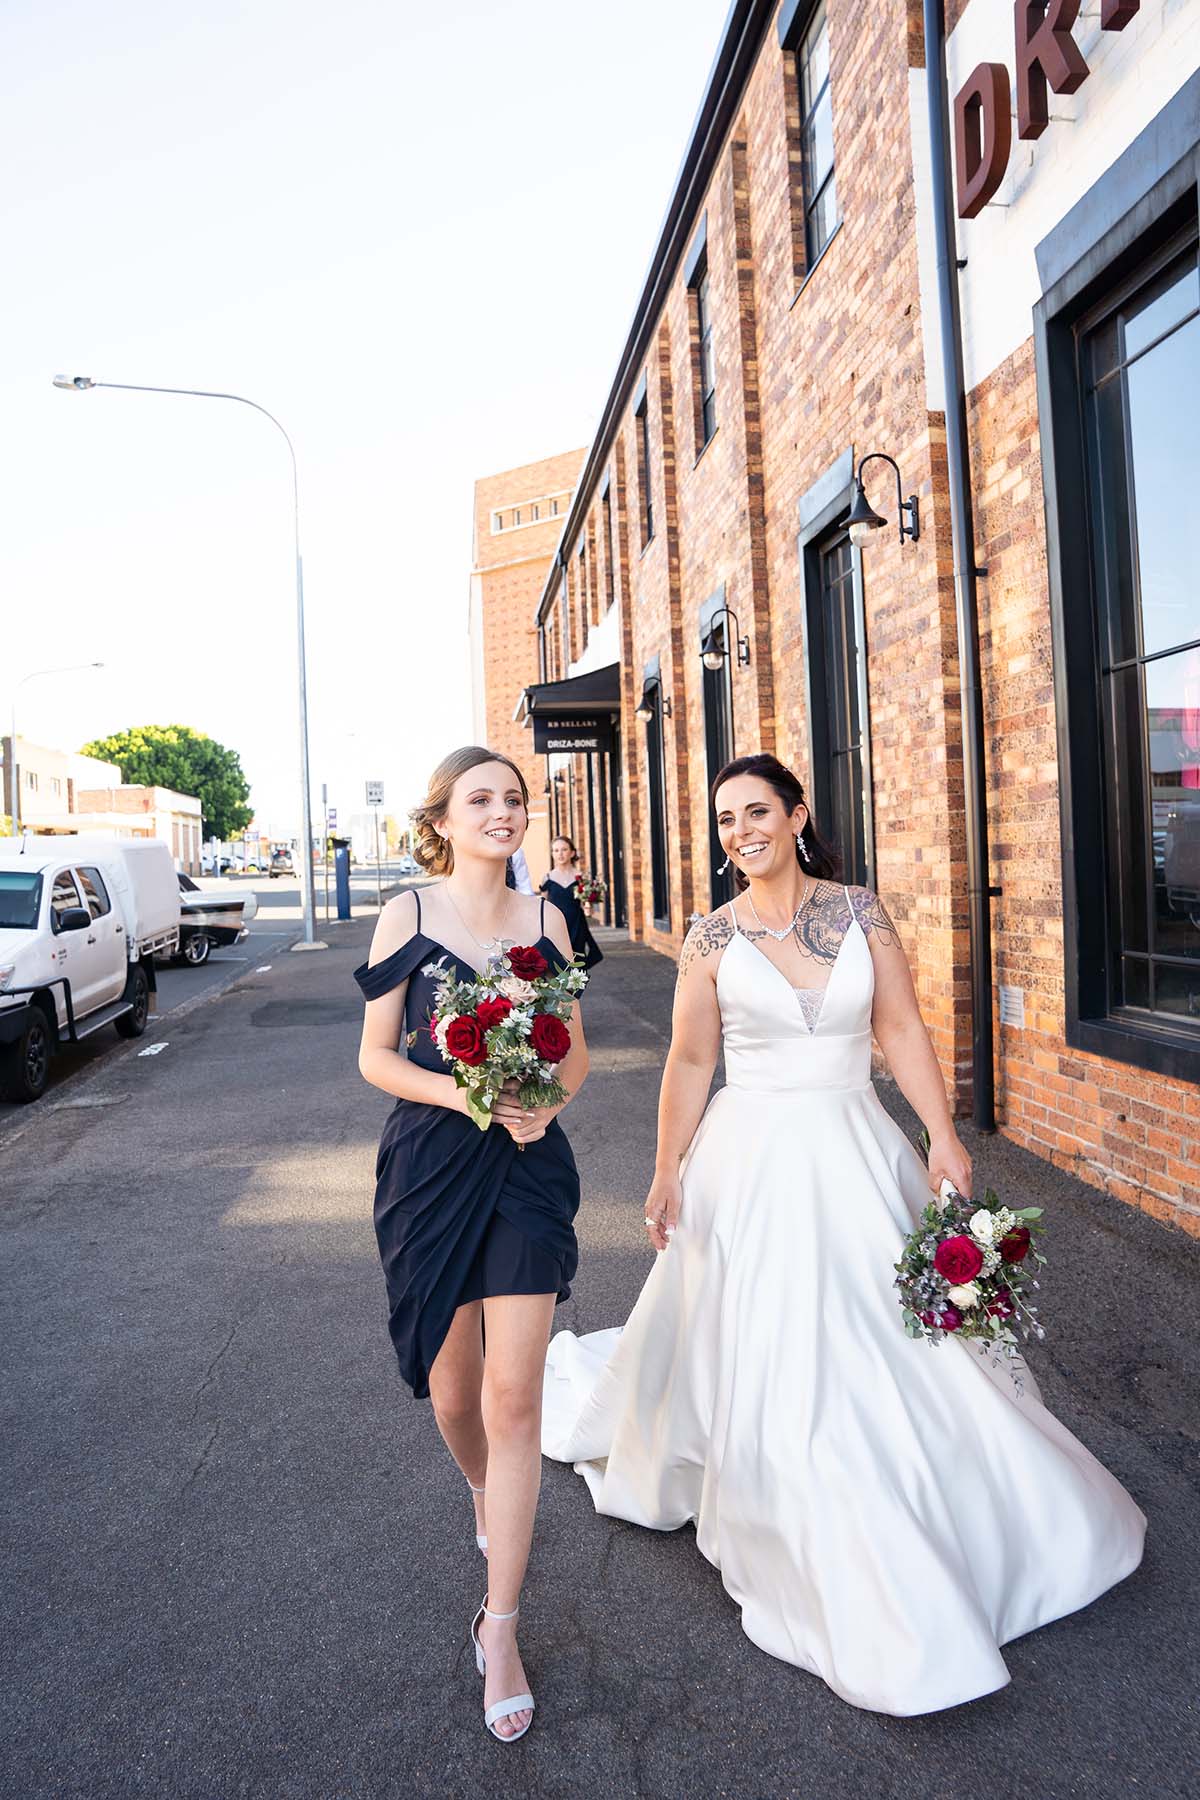 Wedding Photography - Bride and Bridesmaid walking